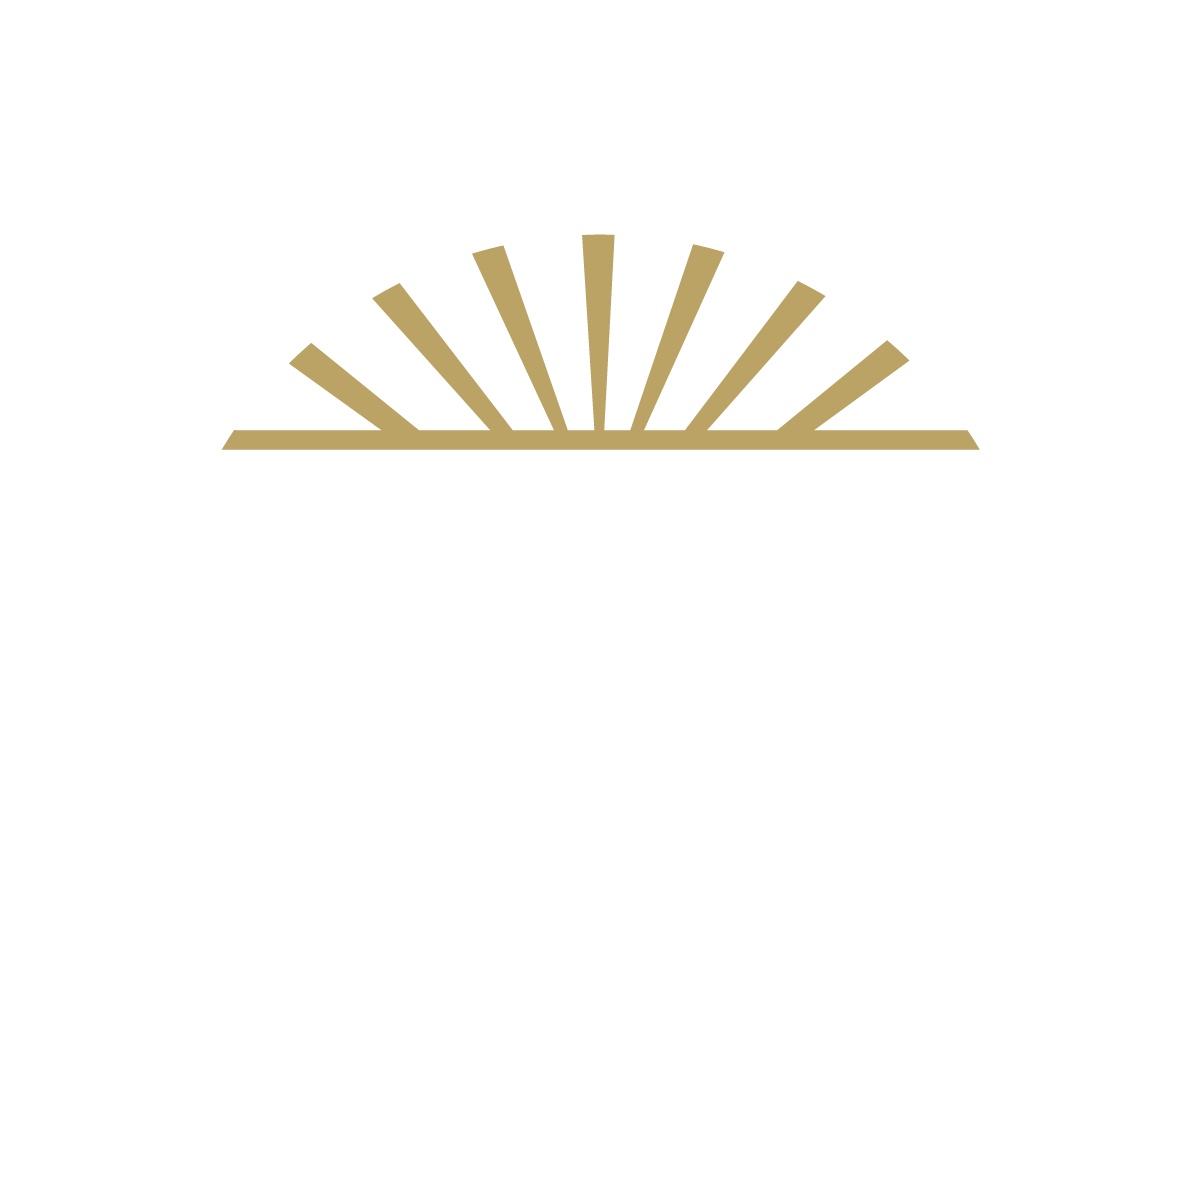 She Thrives